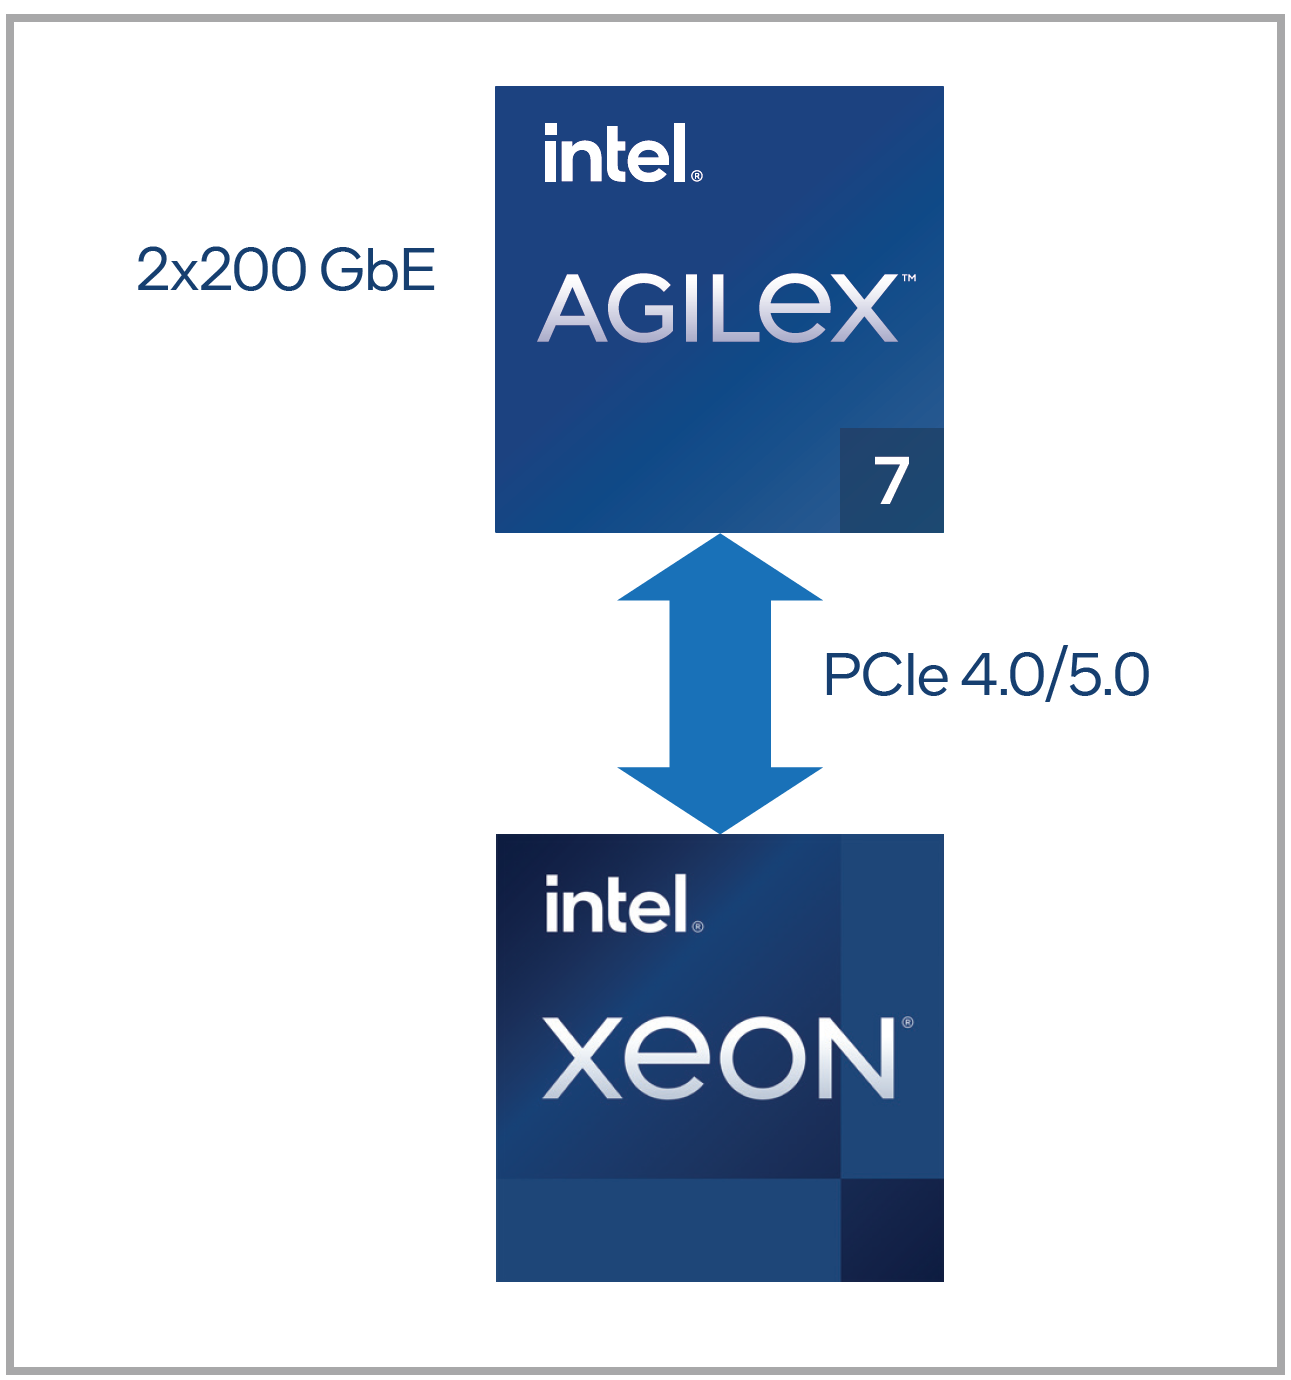 Intel Agilex 7 efficient network transformation infographic